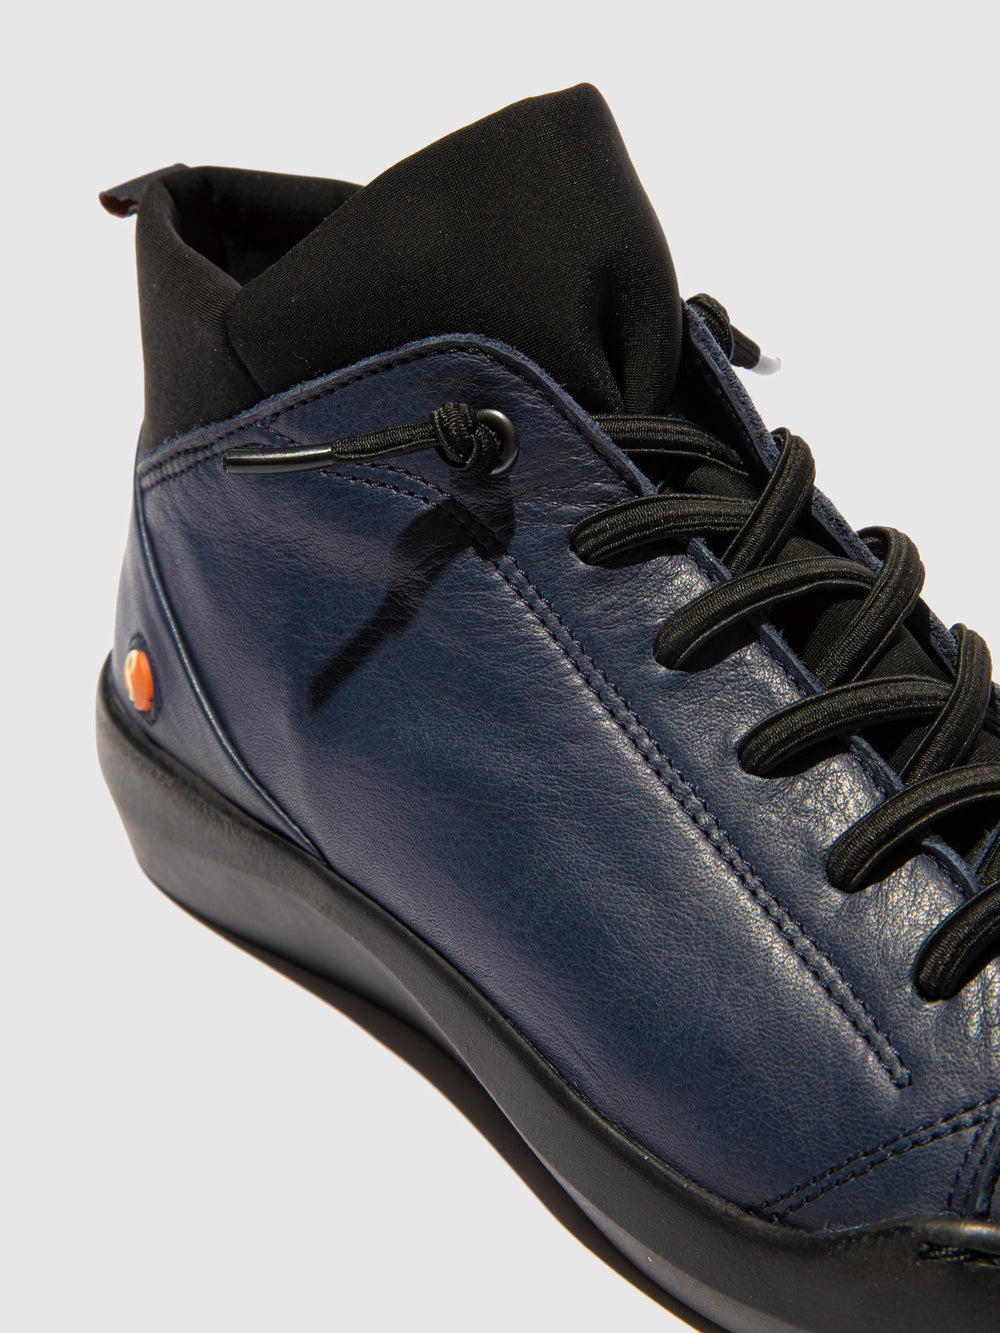 Lace-up Ankle Boots BIEL549SOF NAVY/BLACK NEOPRENE